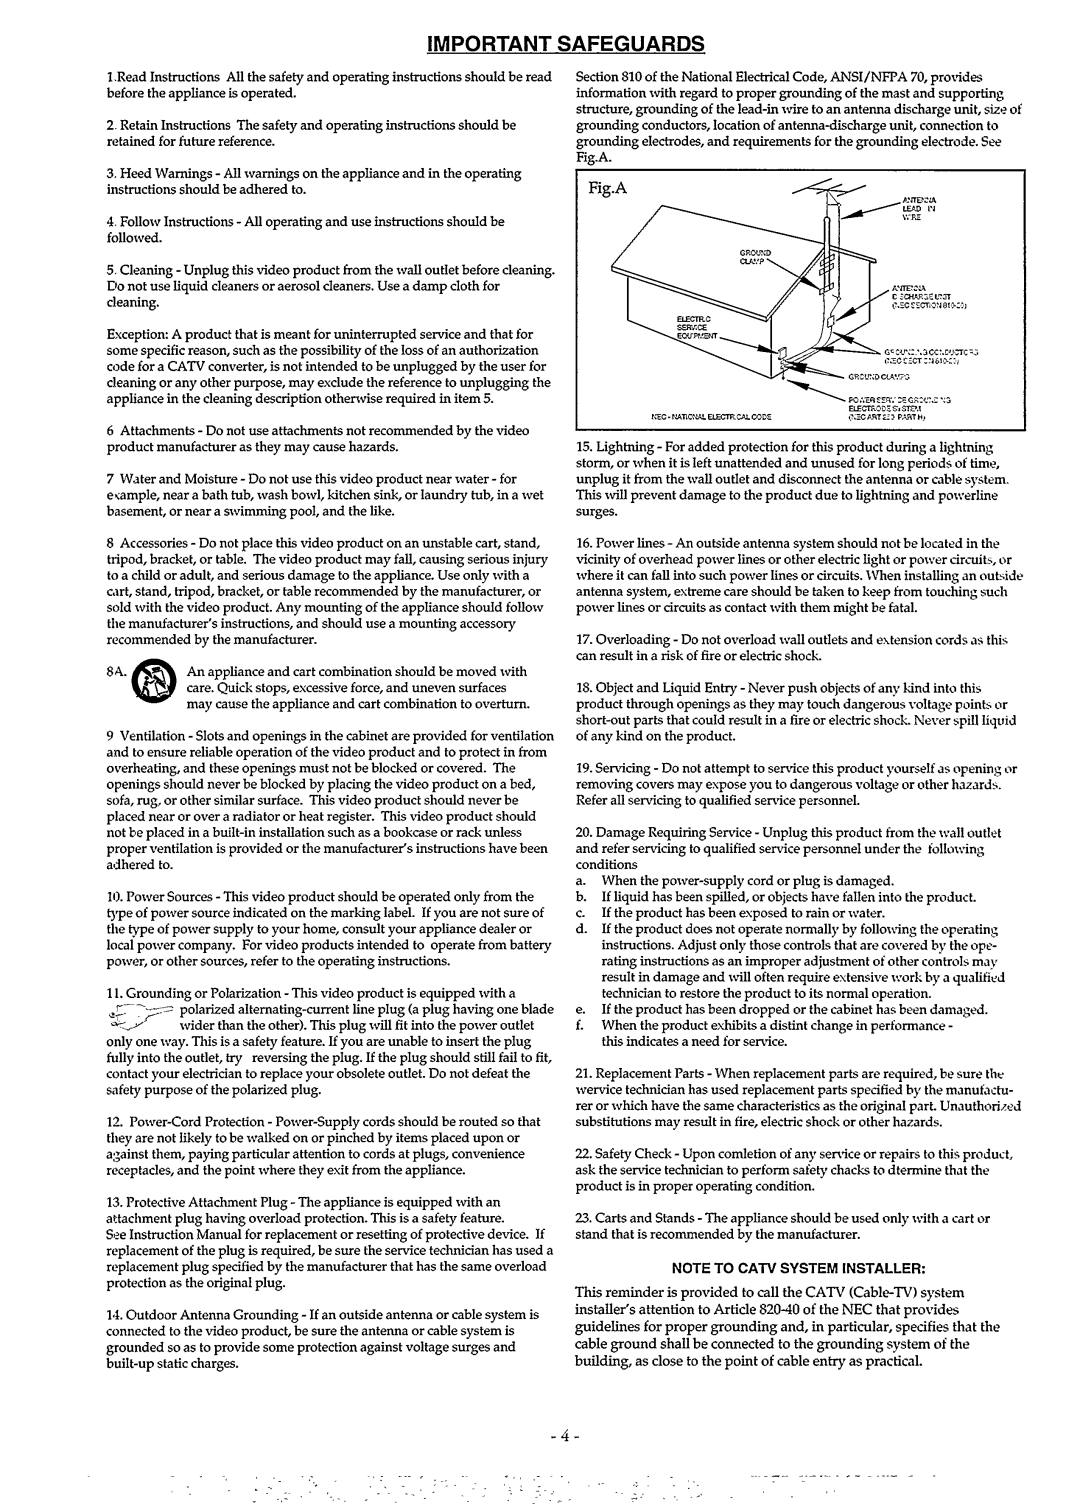 Philips CDI200/37 manual 